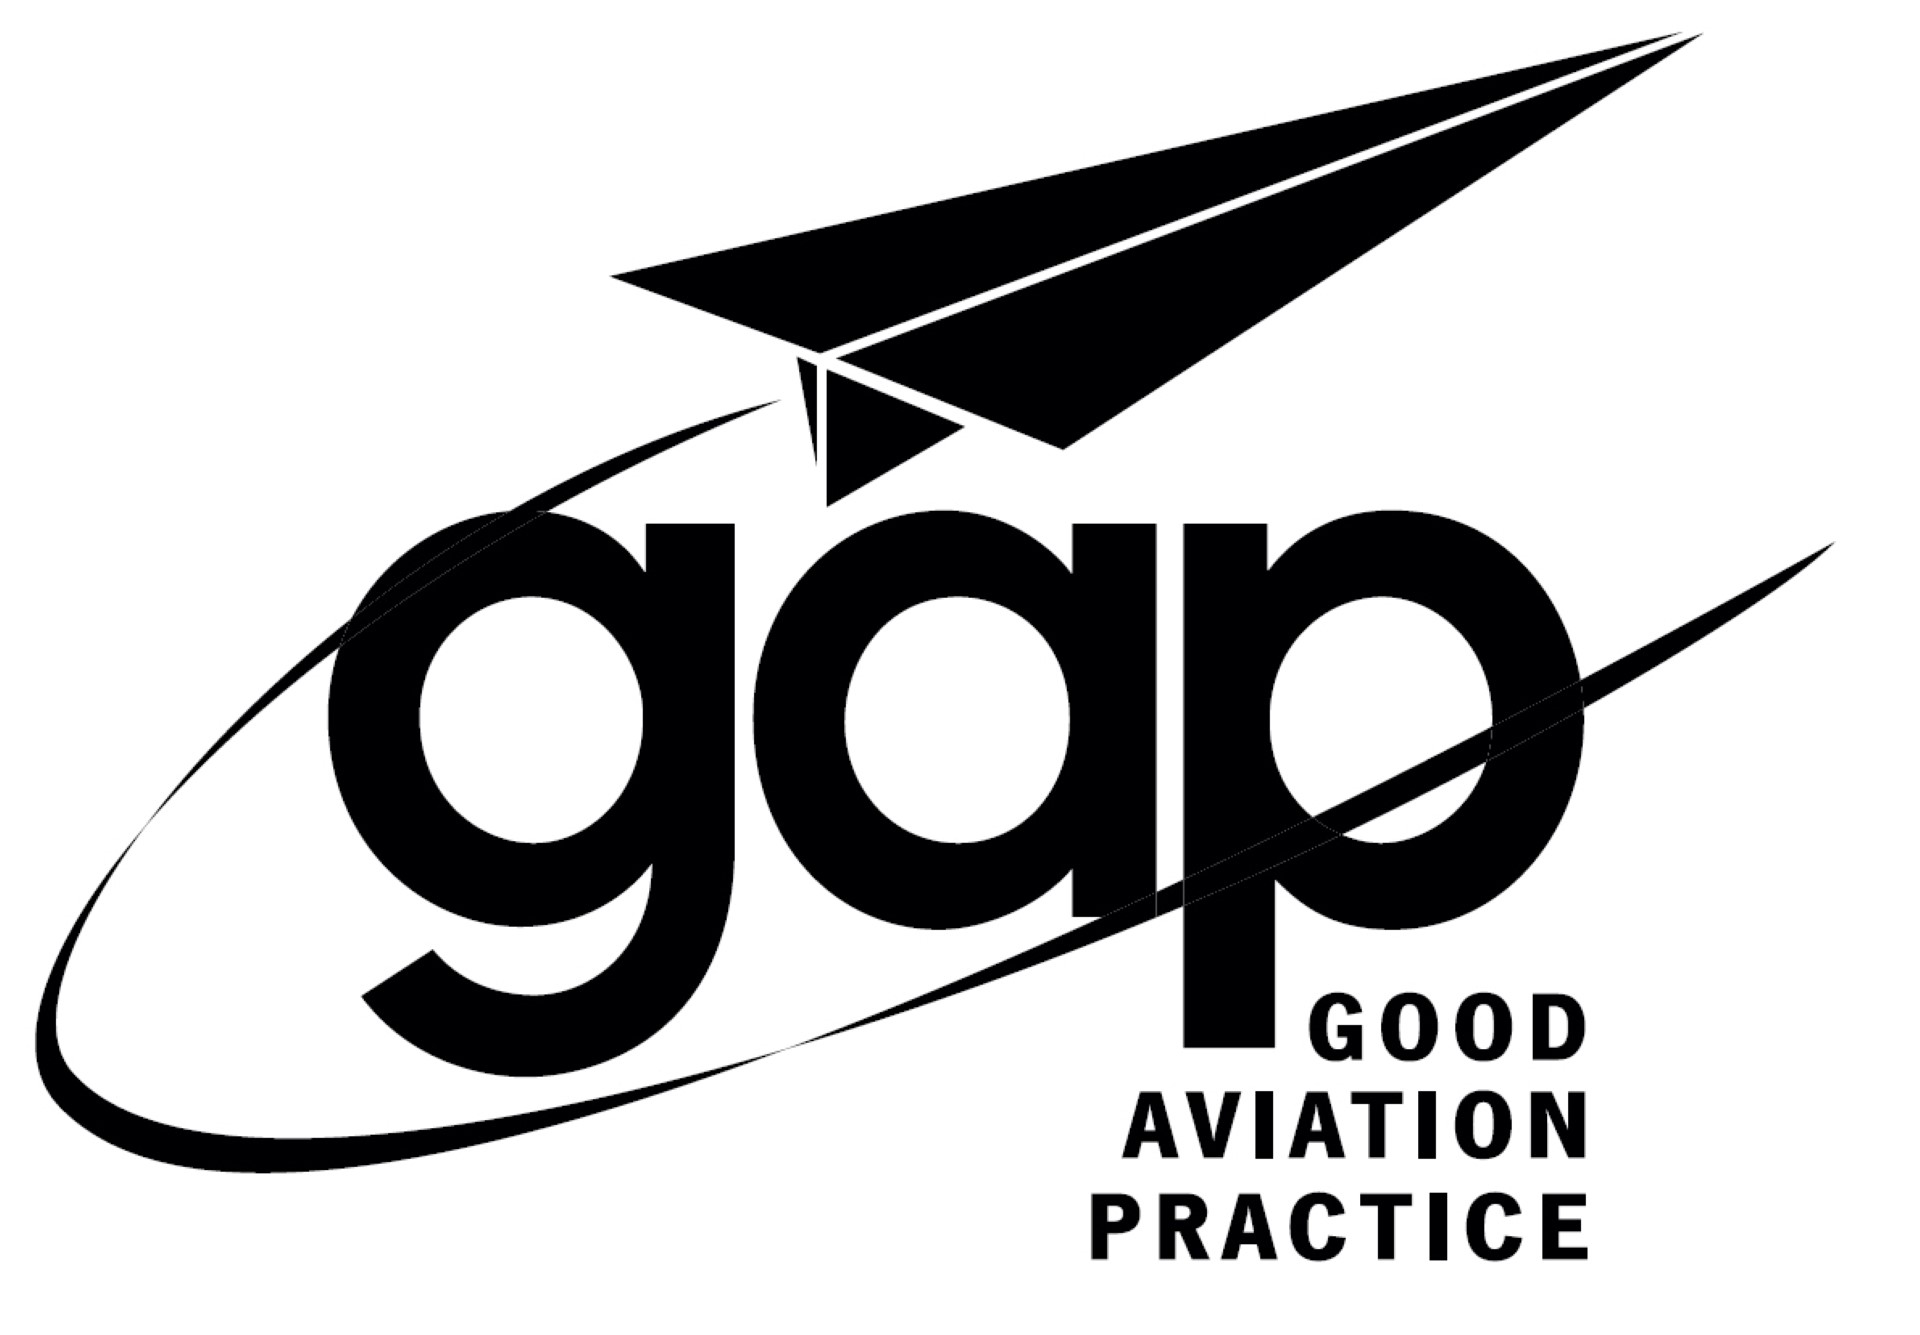 Good Aviation Practice logo